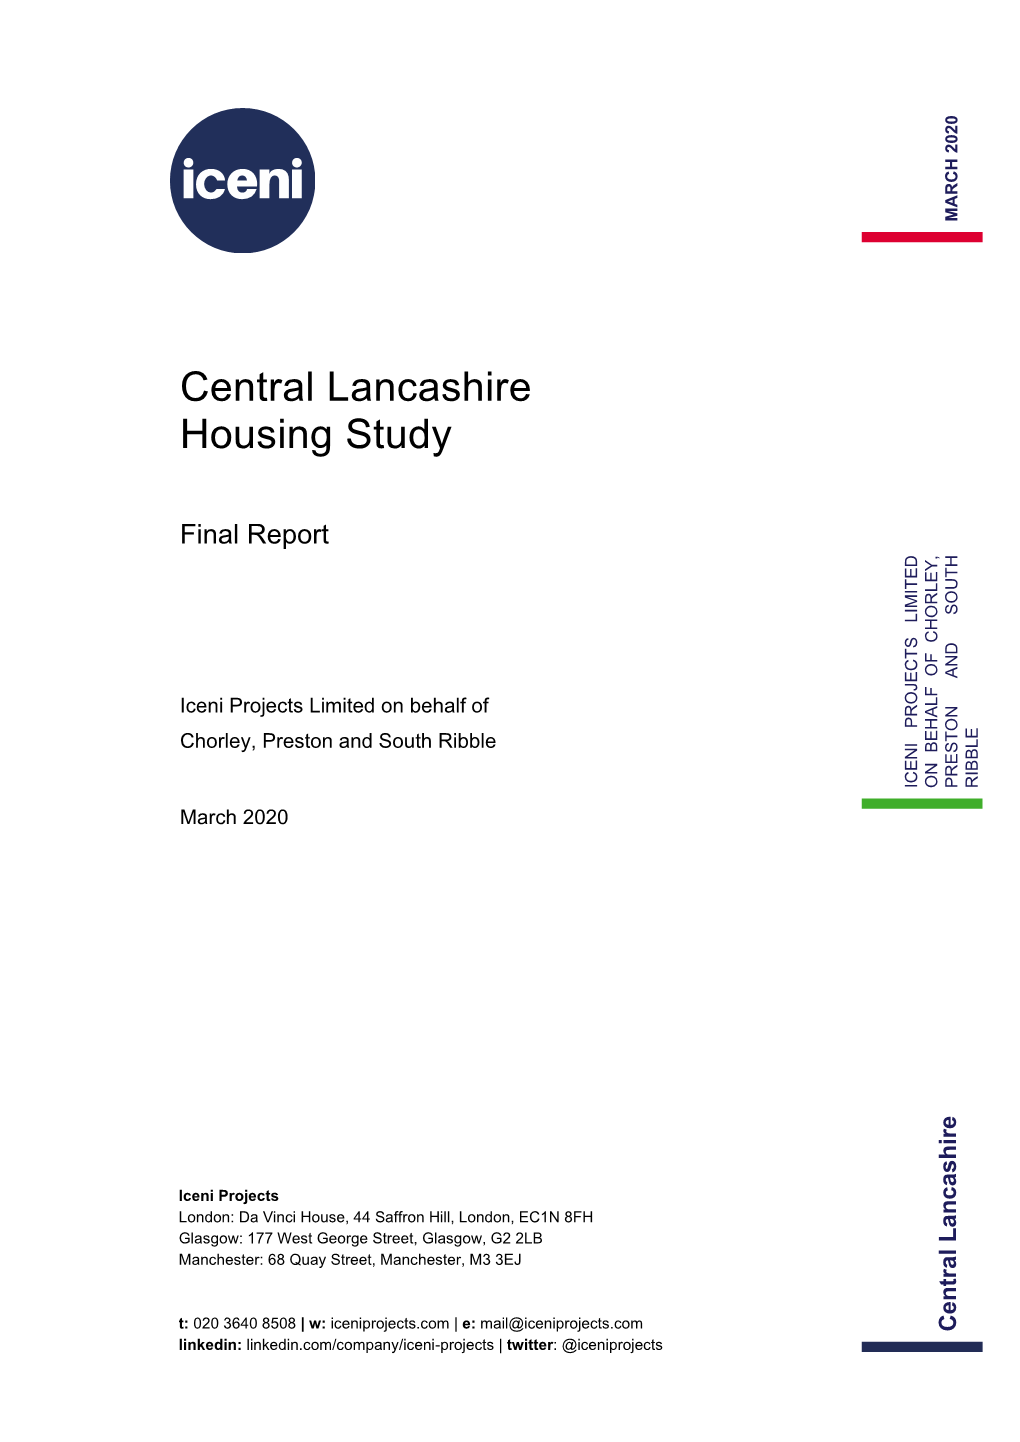 Central Lancashire Housing Study